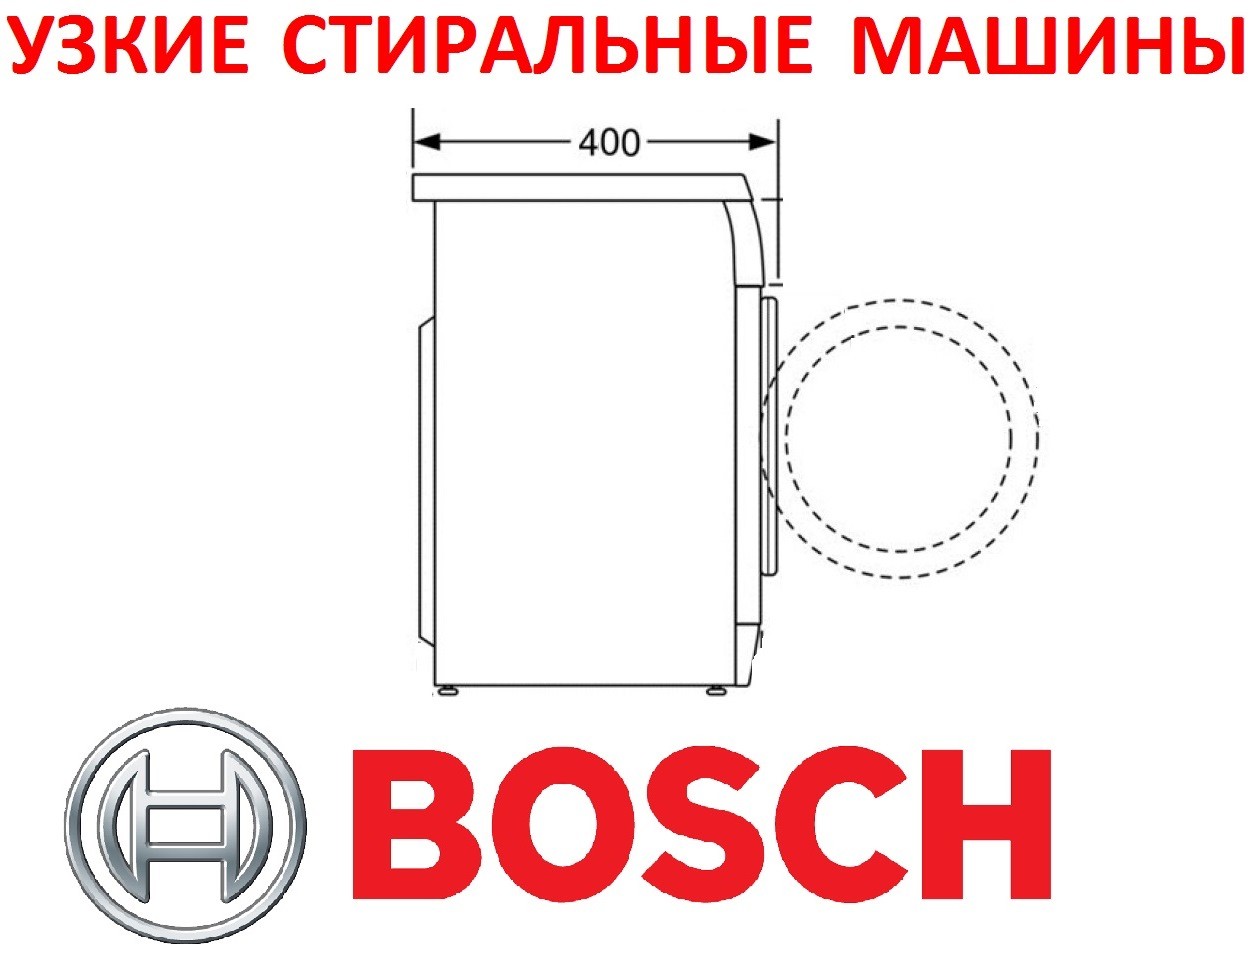 Bosch smale frontvaskemaskiner